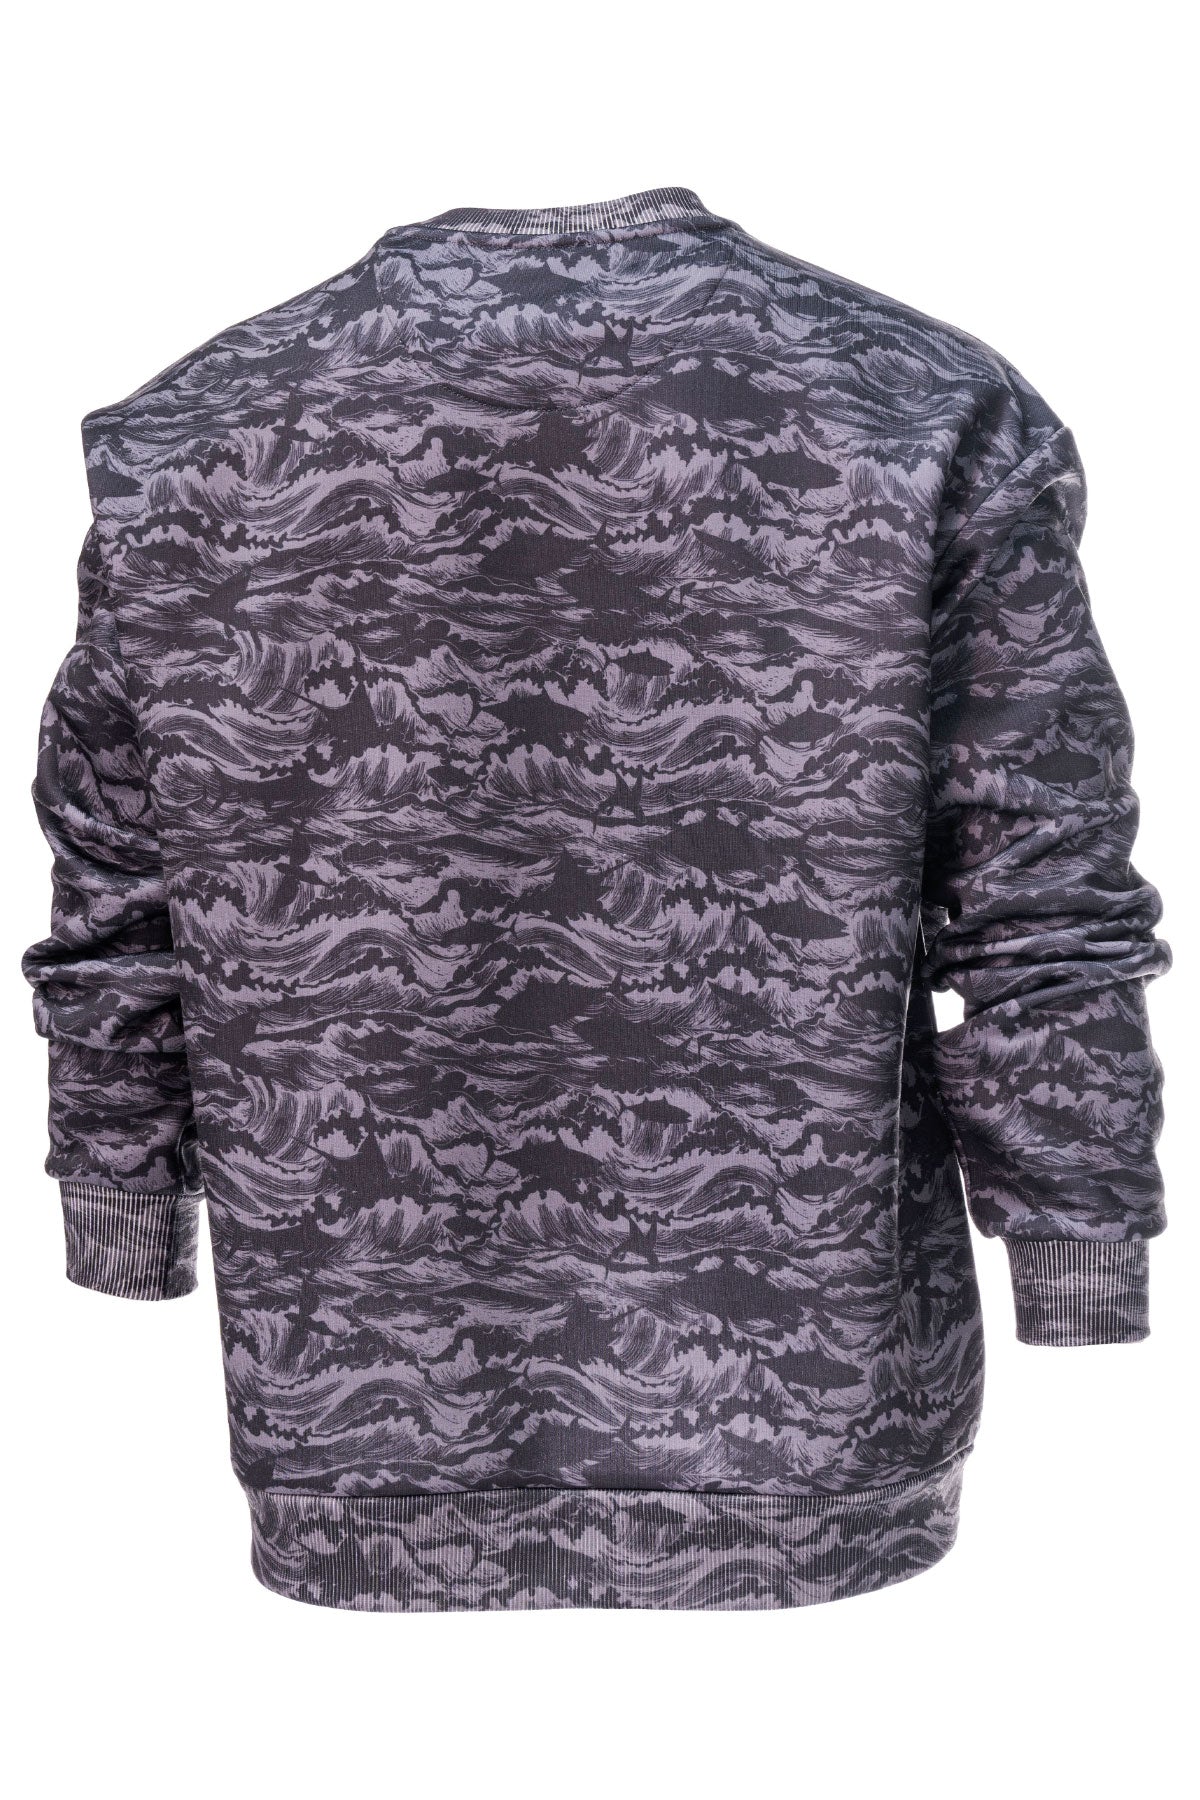 Retro Crew Neck Long Sleeve Sweatshirt - Signature - Black - Stafu Pro Series